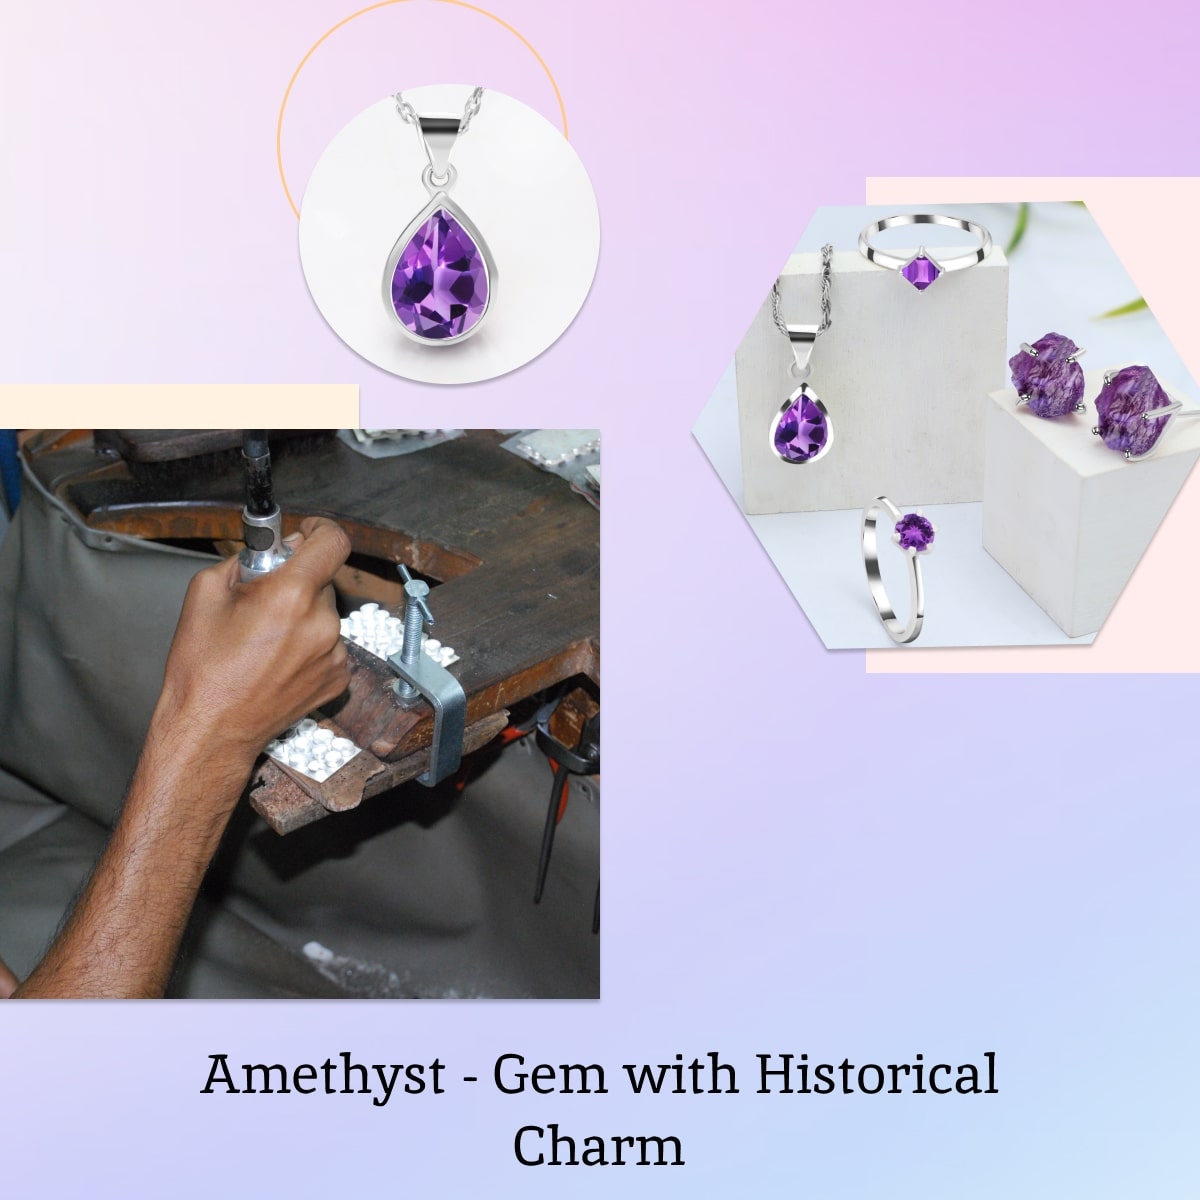 Amethyst History